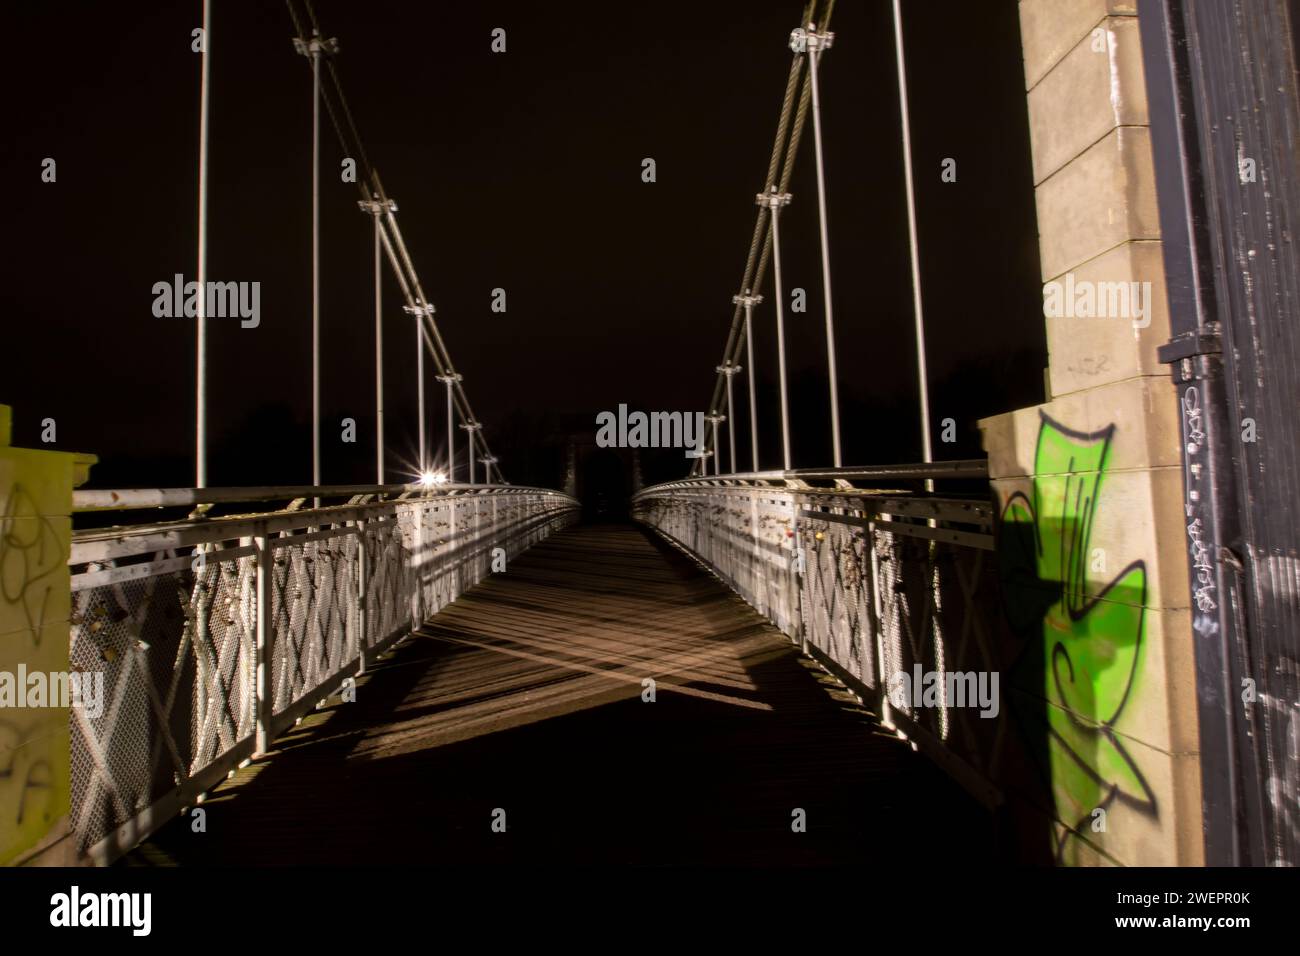 The Wilford Suspension Bridge at night in Nottingham, UK Stock Photo